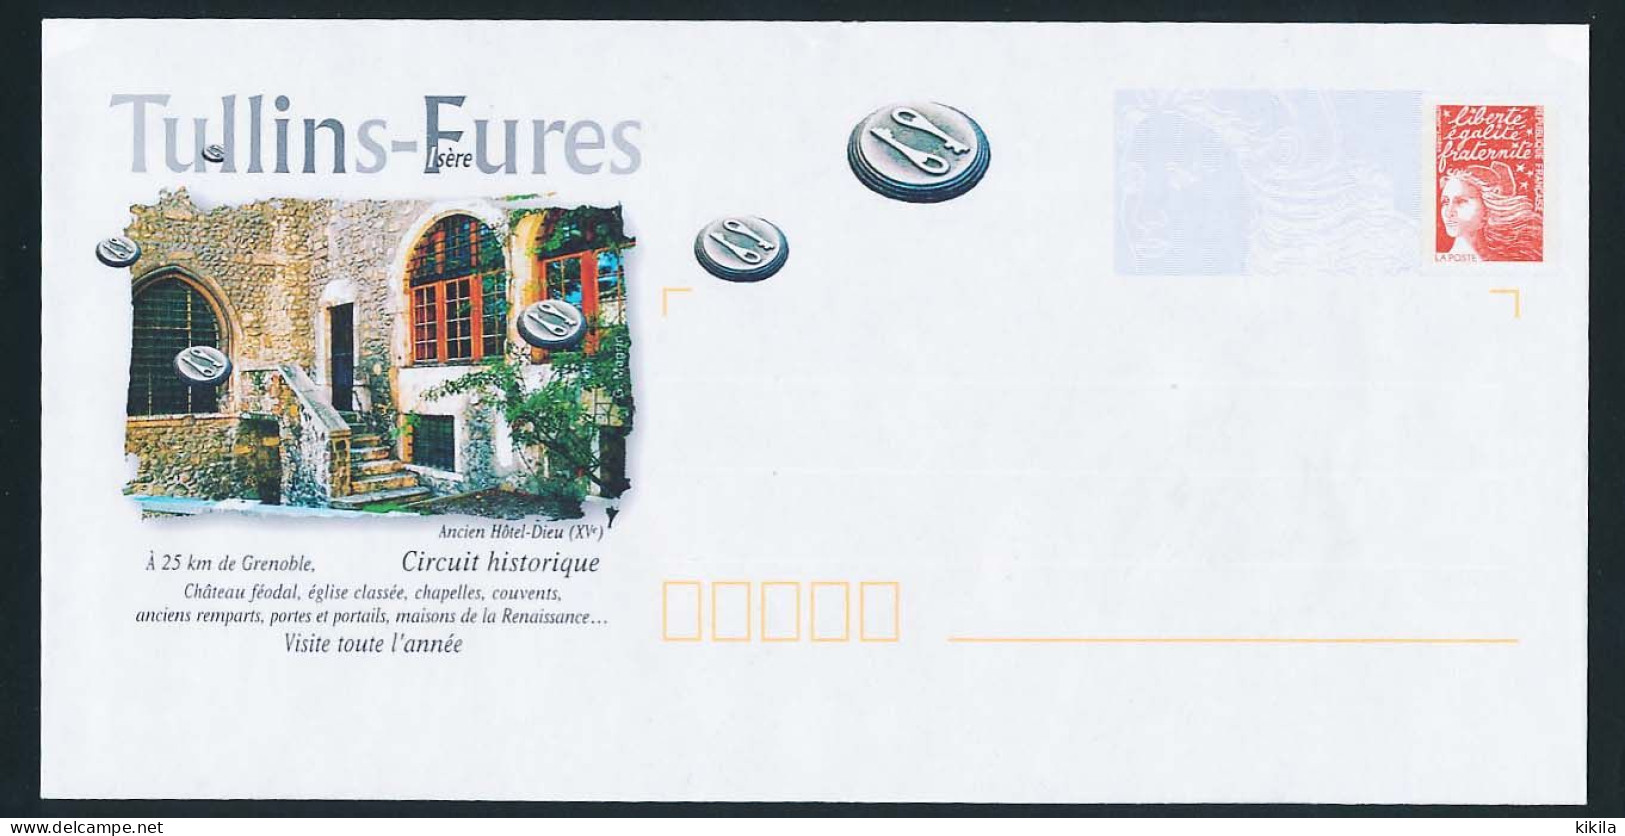 Enveloppe Illustrée Neuve 22 X 11 Isère TULLINS-FURES Ancien Hôtel-Dieu (XV° Siècle) - Tullins